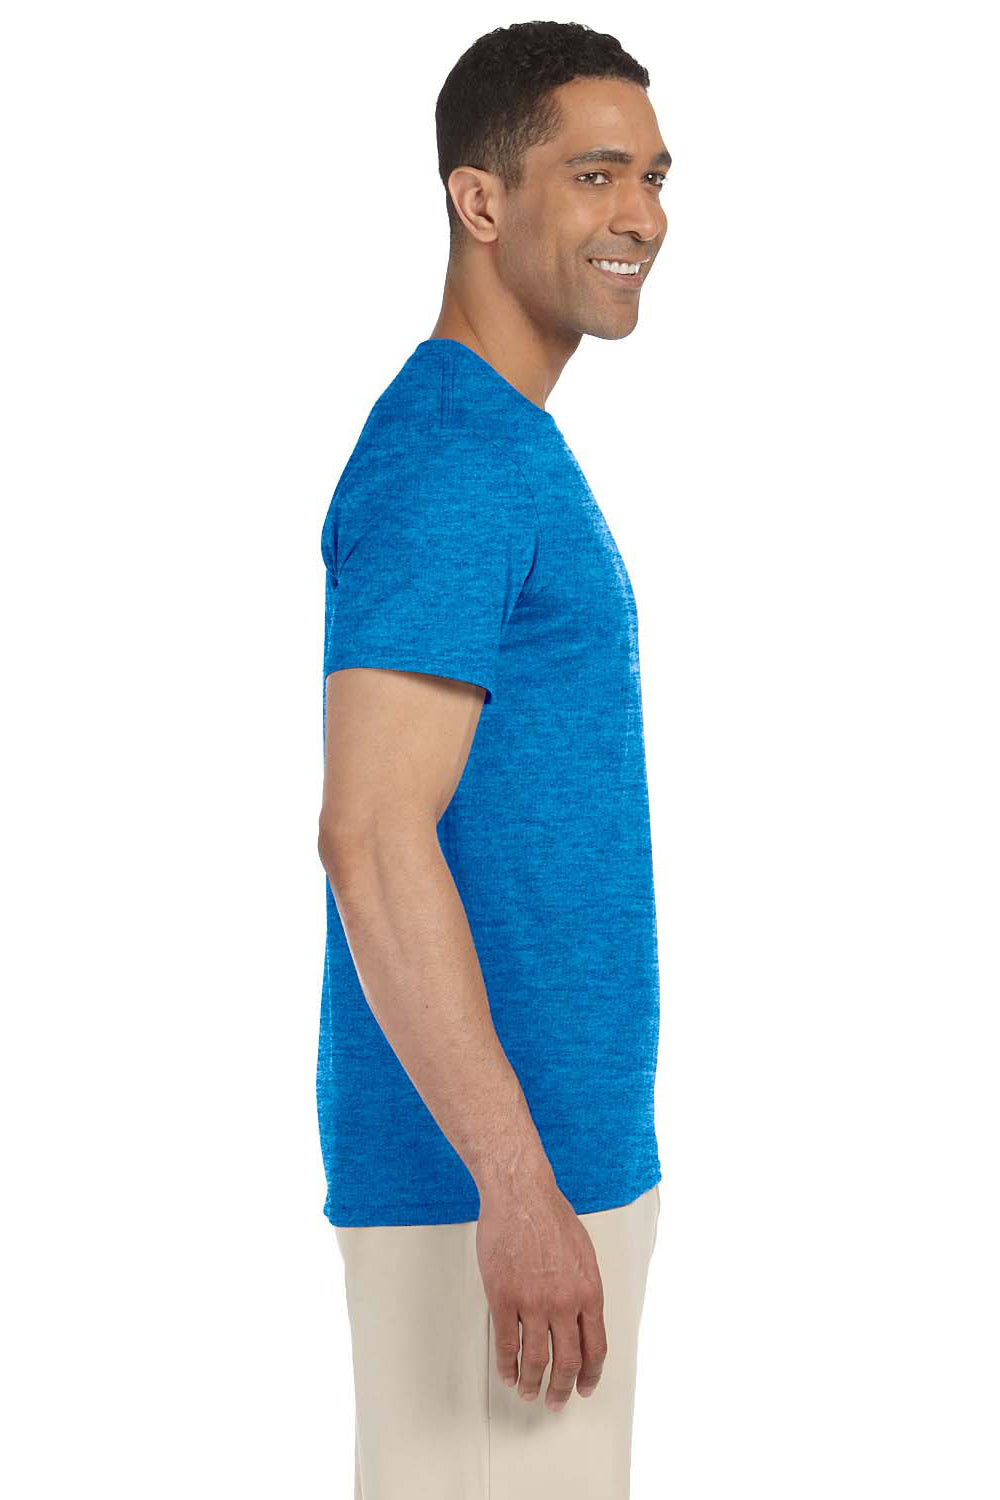 Gildan G640 Mens Softstyle Short Sleeve Crewneck T-Shirt Heather Royal Blue Side